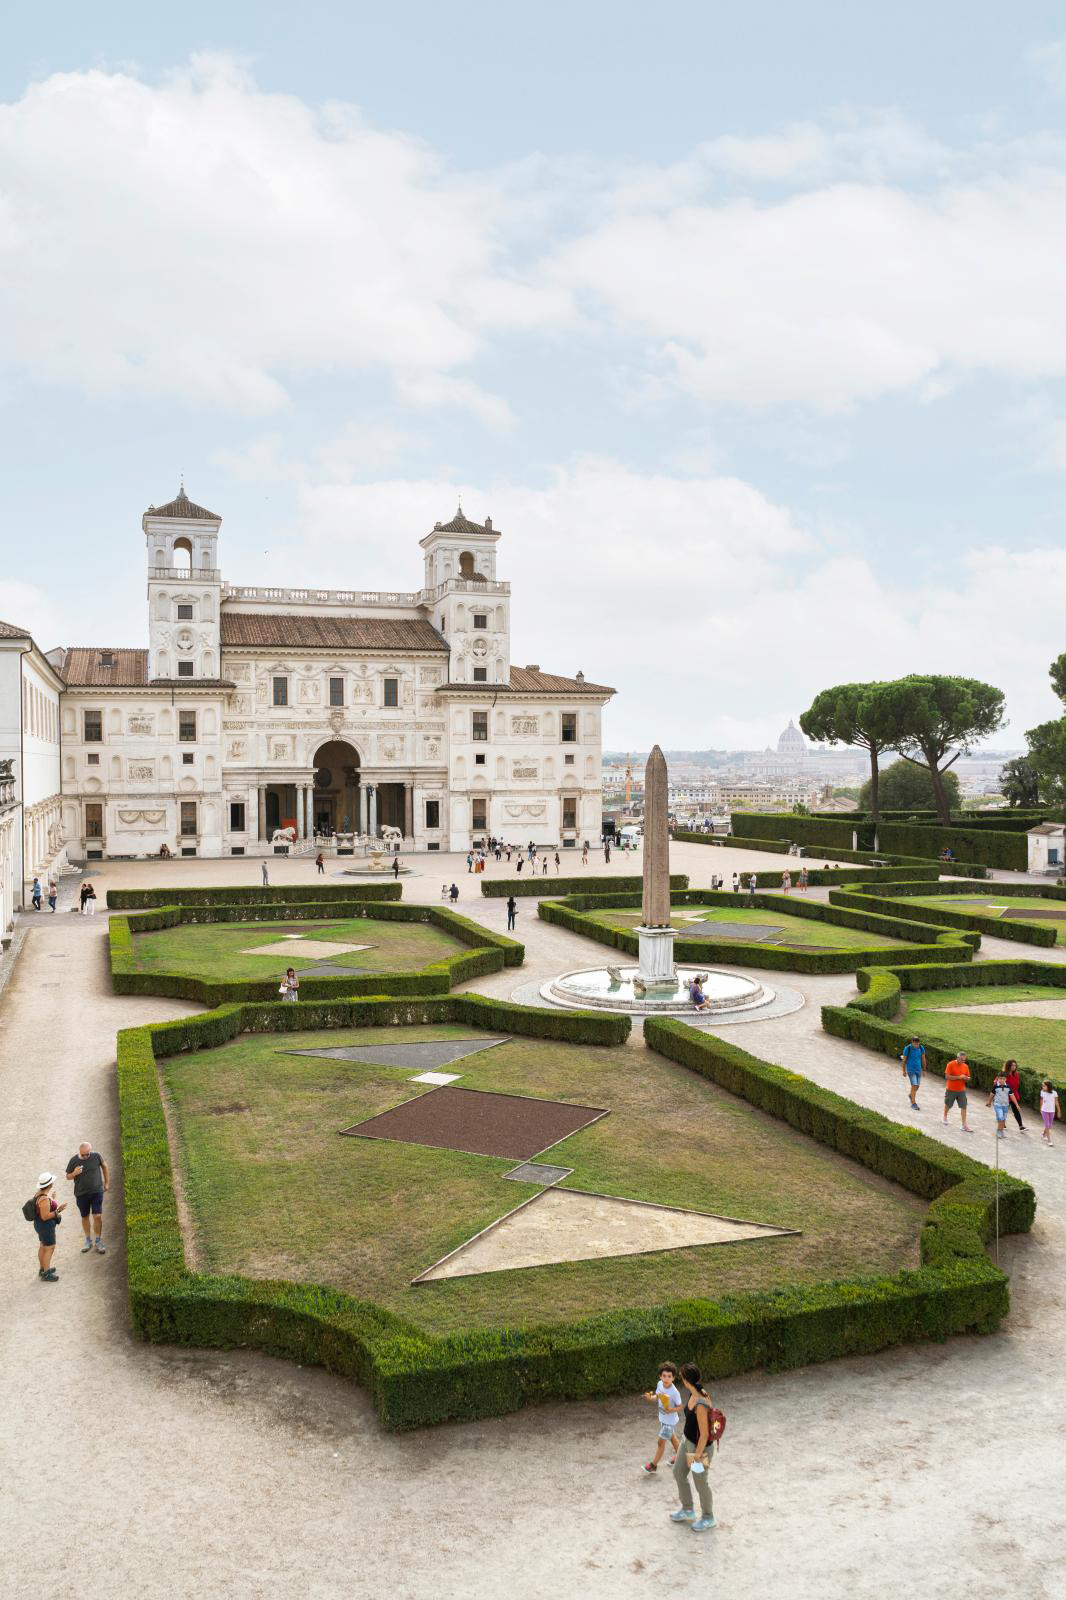 View of the interior façade and gardens of the Villa Medici.© Claudia Gori